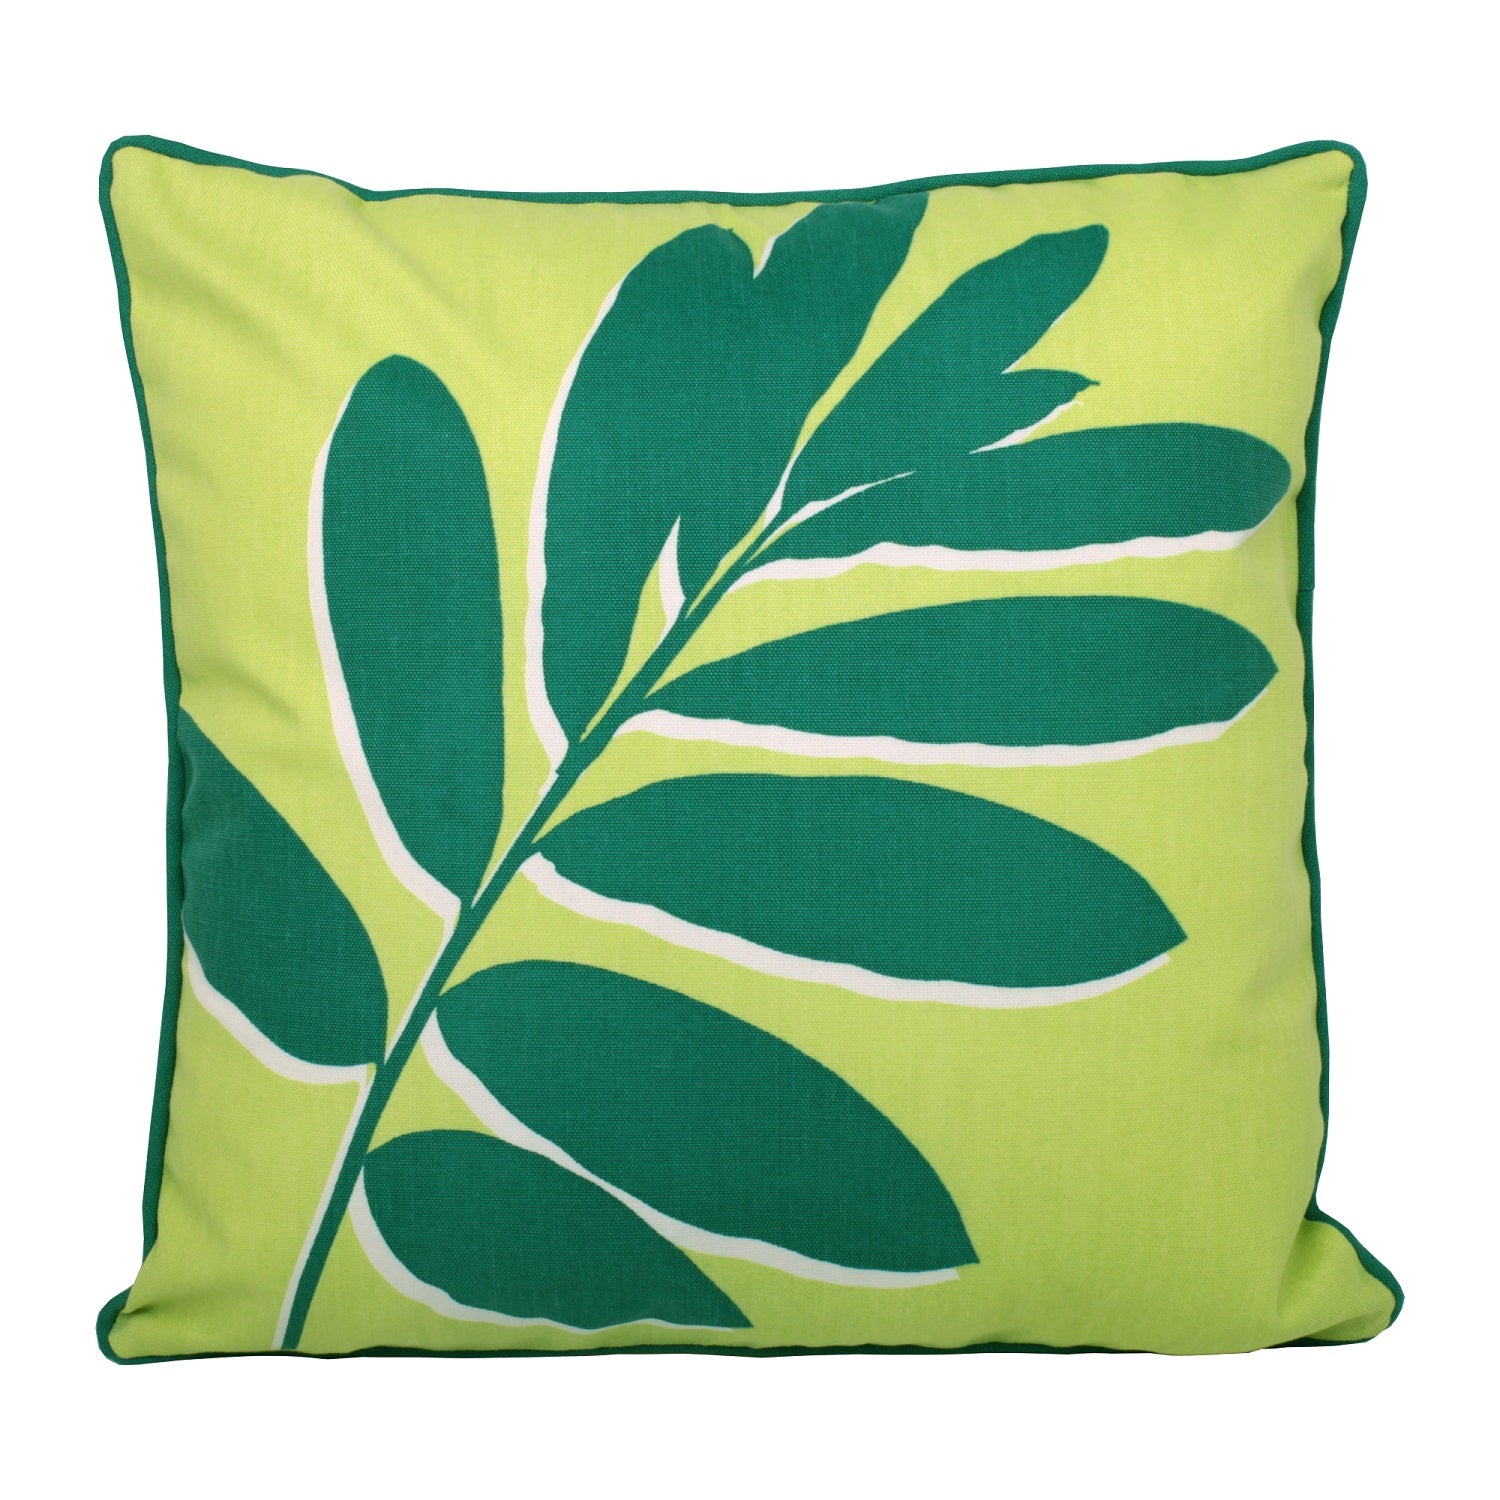 Garden Outdoor Water Resistant Cushion Cover - Green